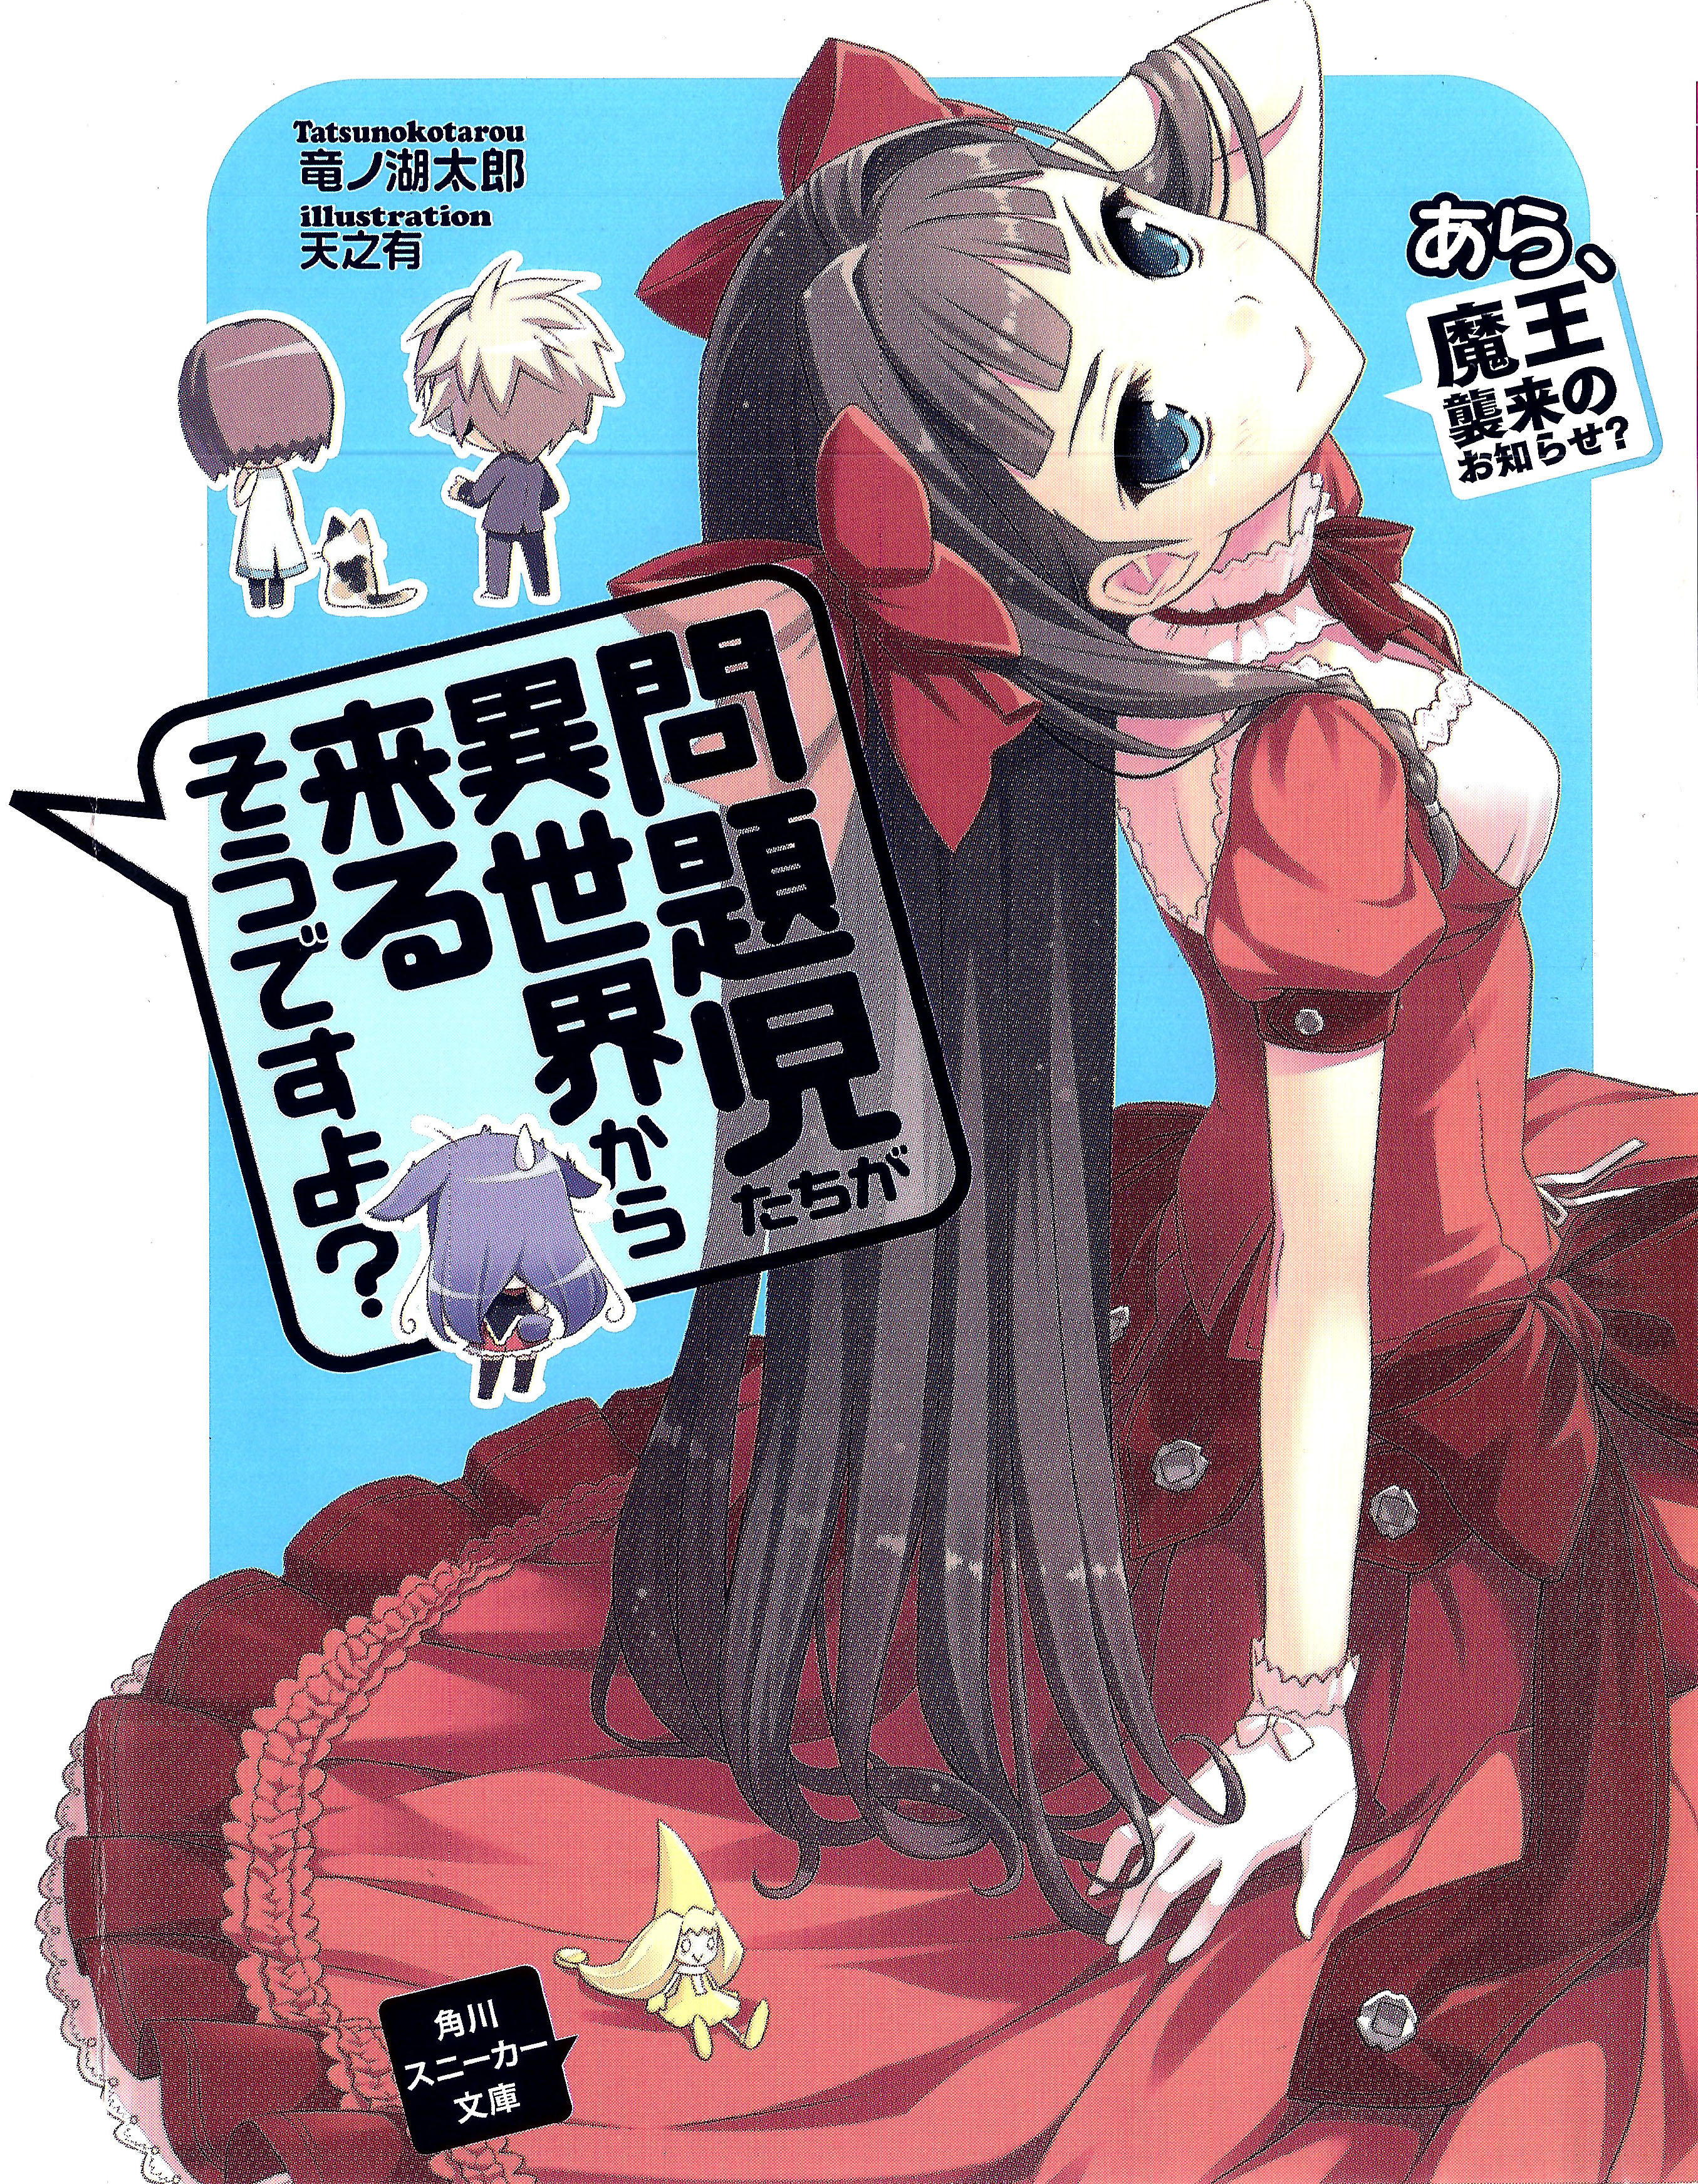 Mondaiji-tachi ga Isekai Light Novel by LunarInfinity on DeviantArt